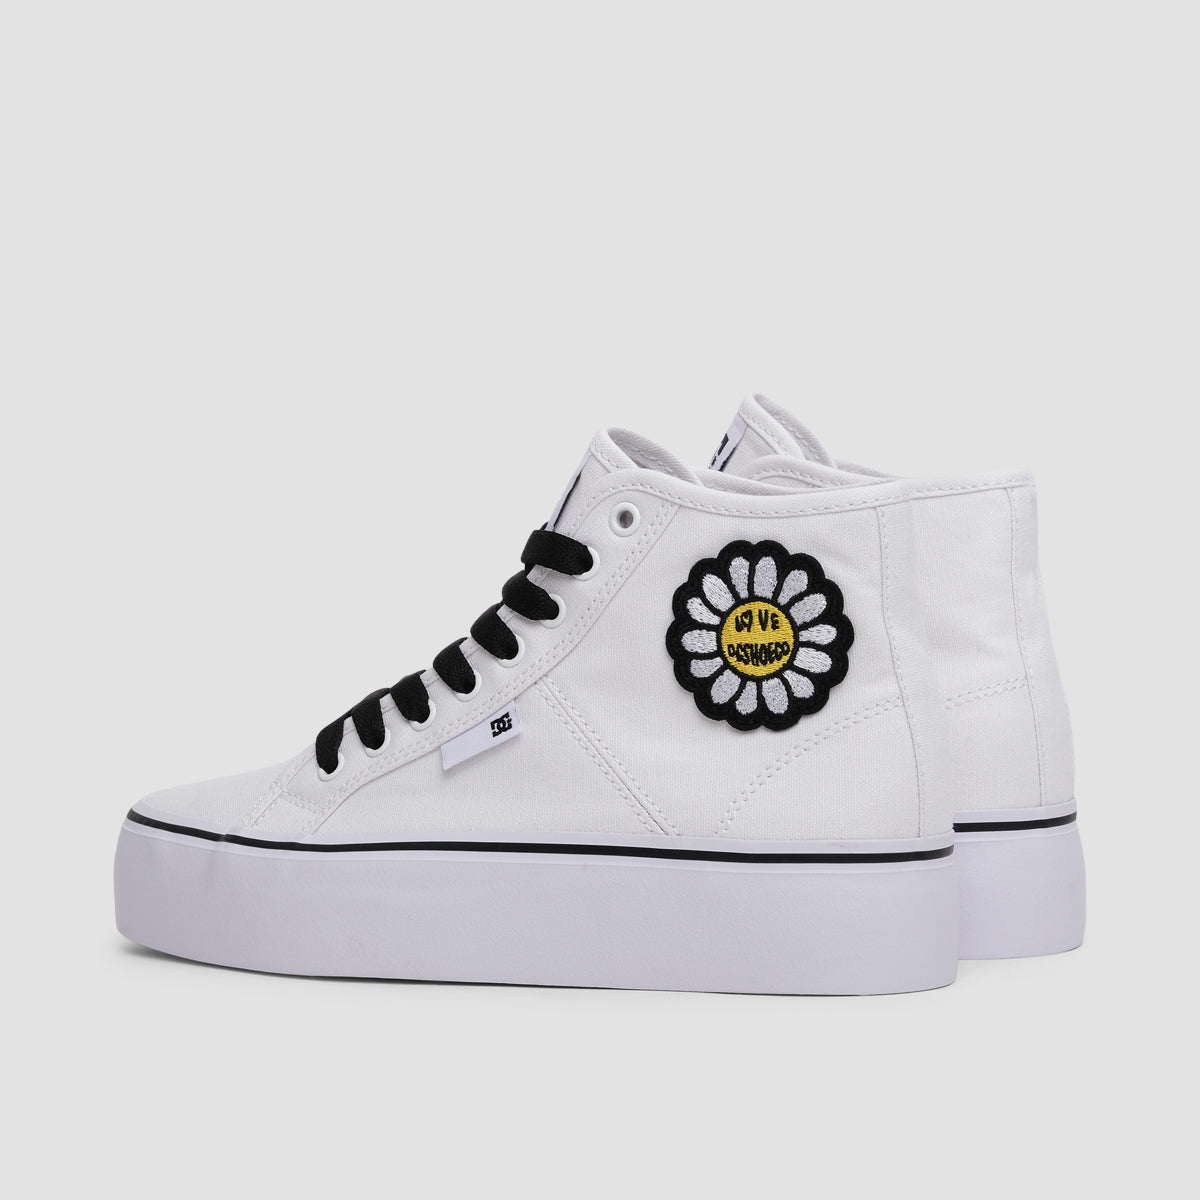 DC Manual Hi Platform Shoes - White/Black/Flower - Womens